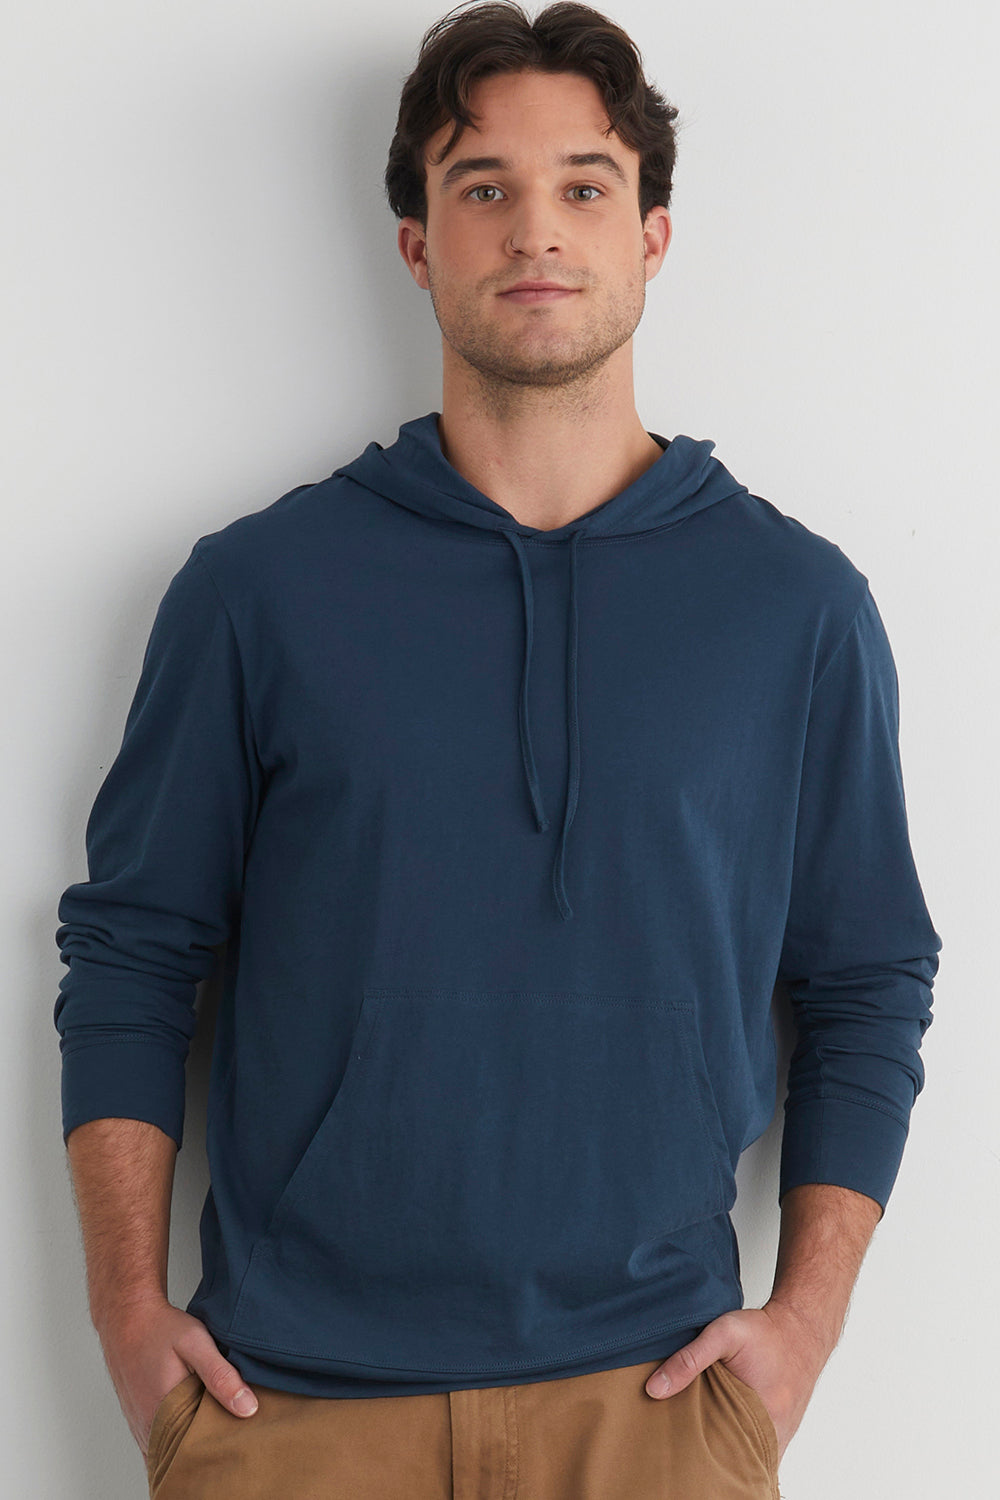 unisex organic all cotton long sleeve hoodie- dark ocean blue - fair trade ethically made